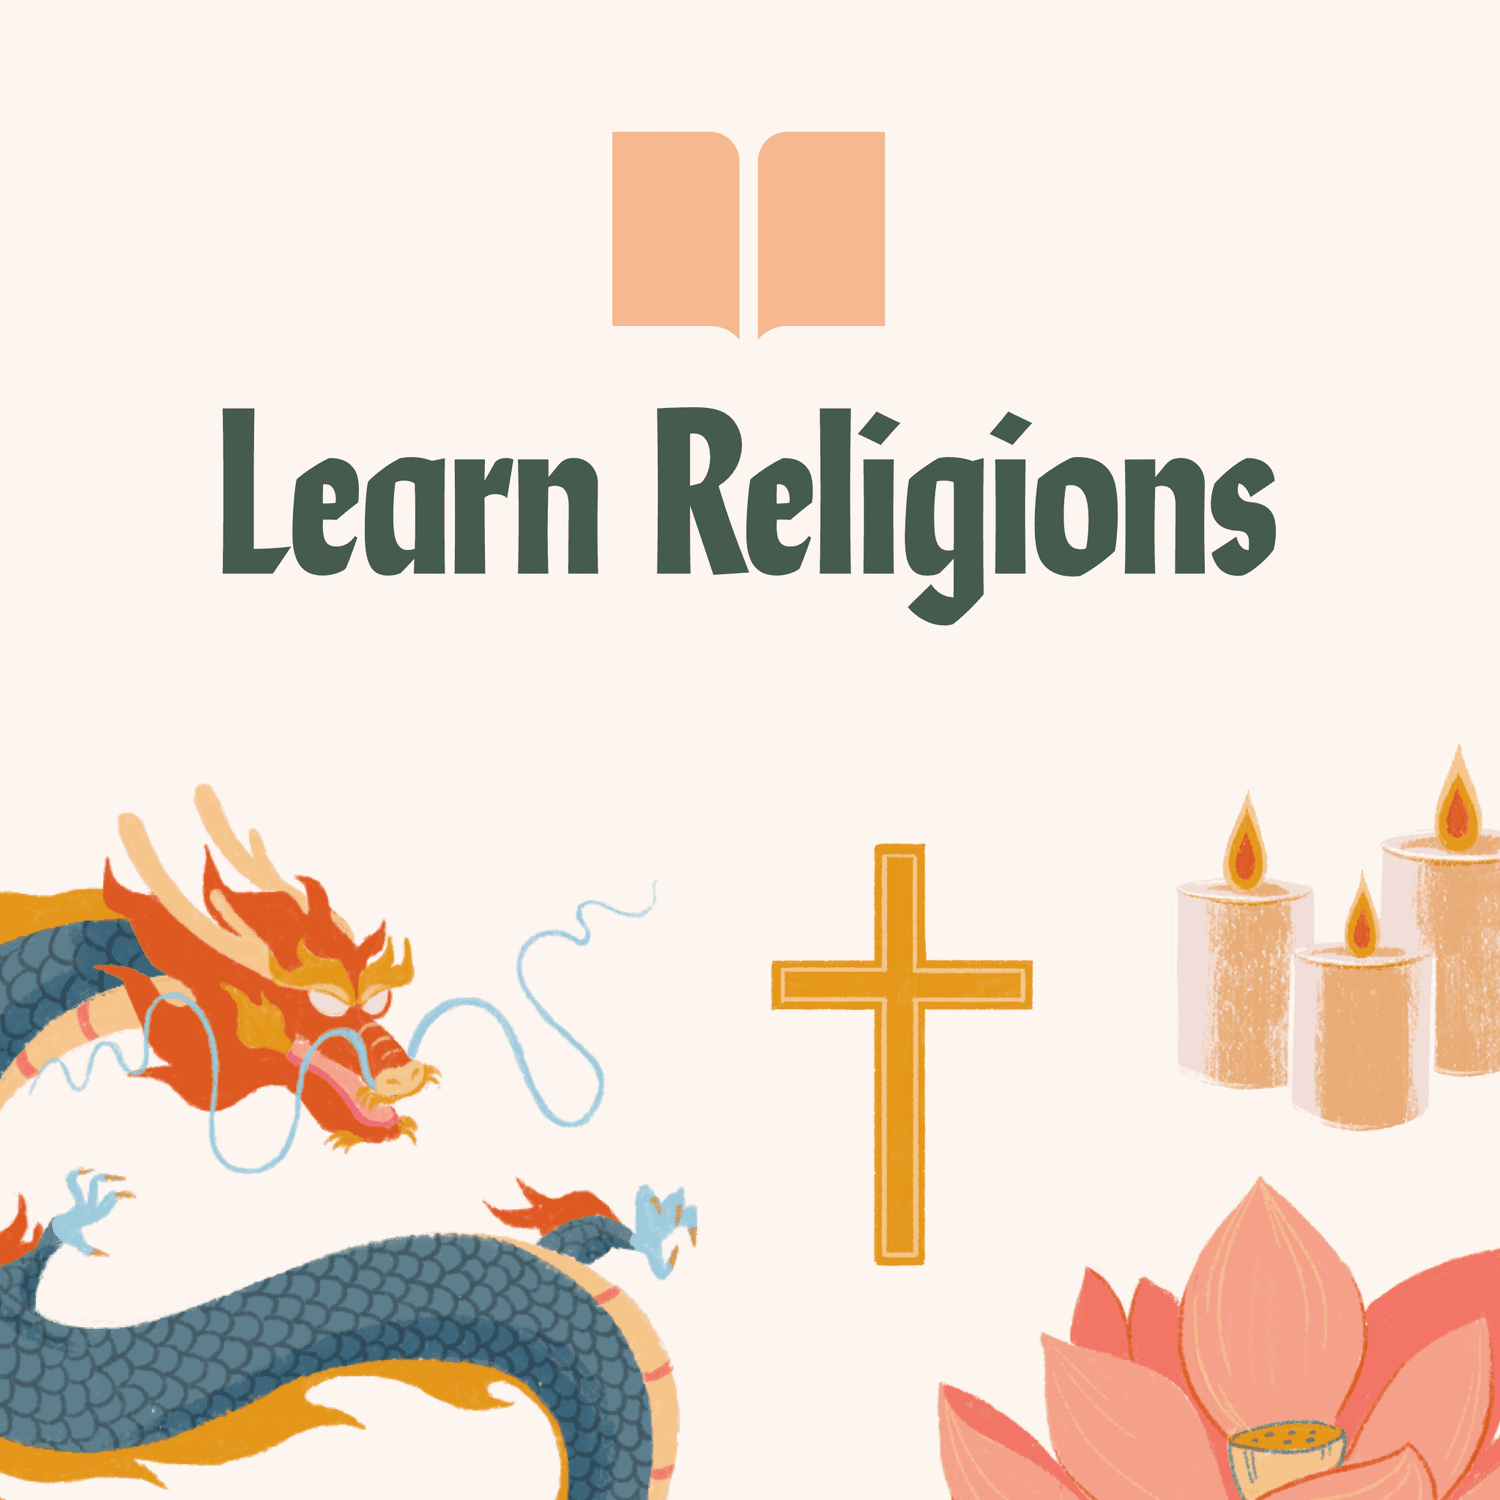 www.learnreligions.com